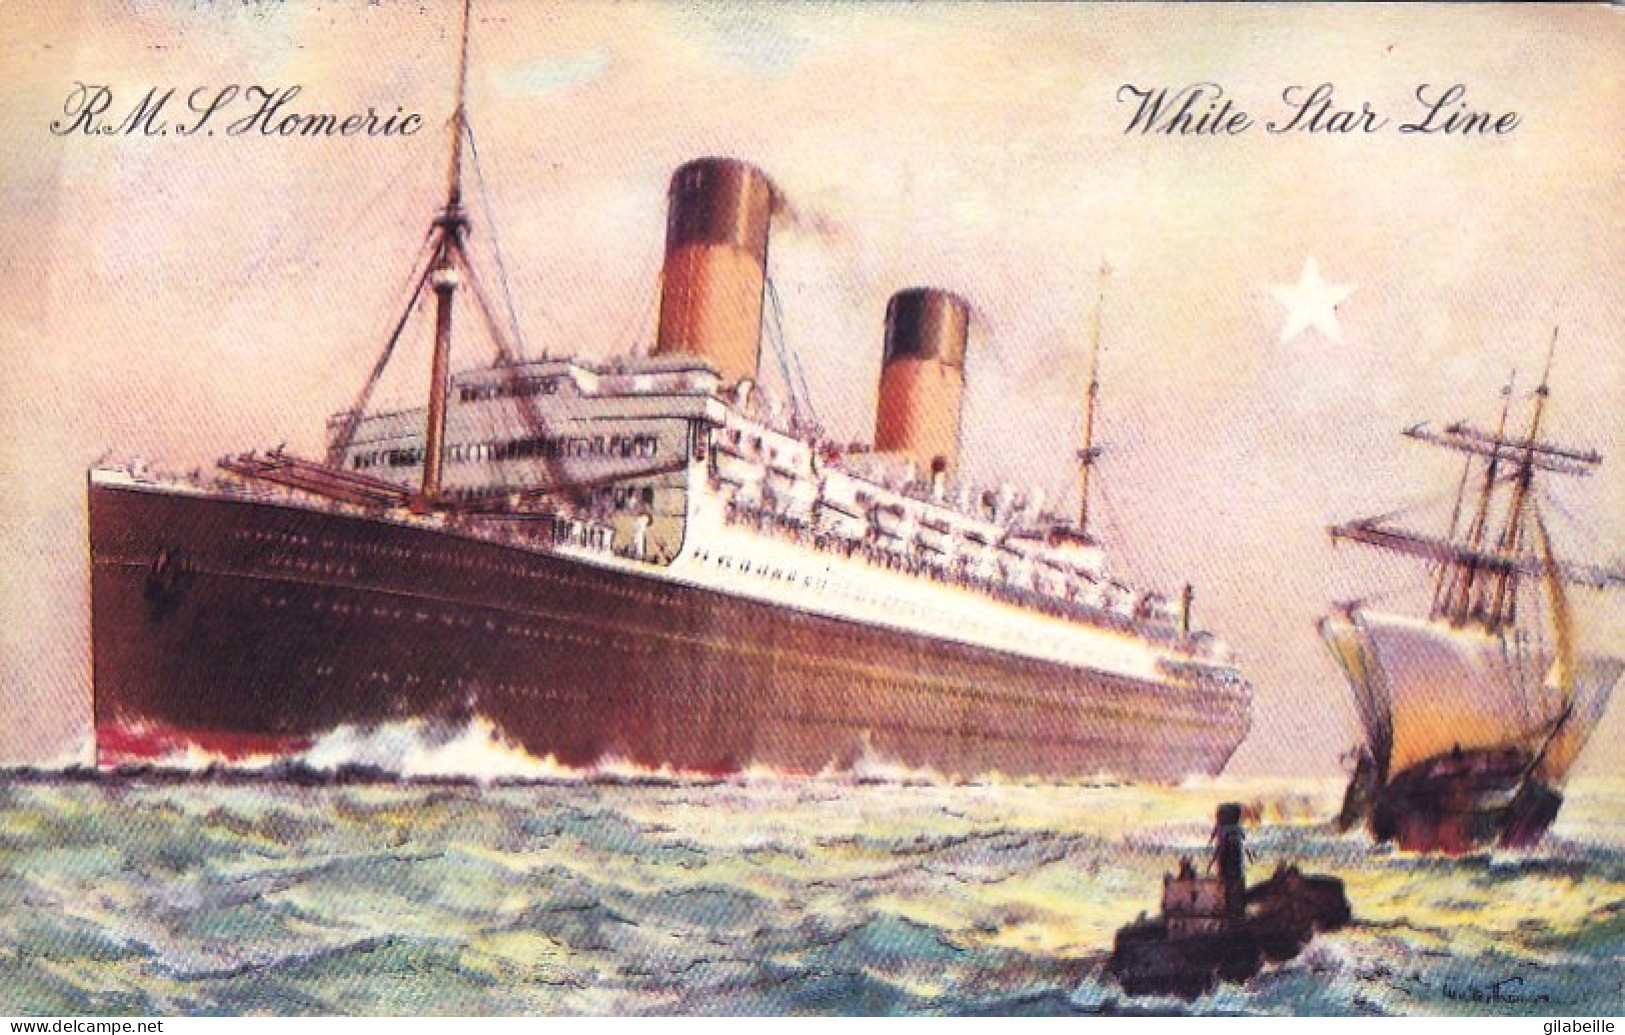 Paquebot - R.M.S Homeric - White Star Line - 1903 - Paquebote